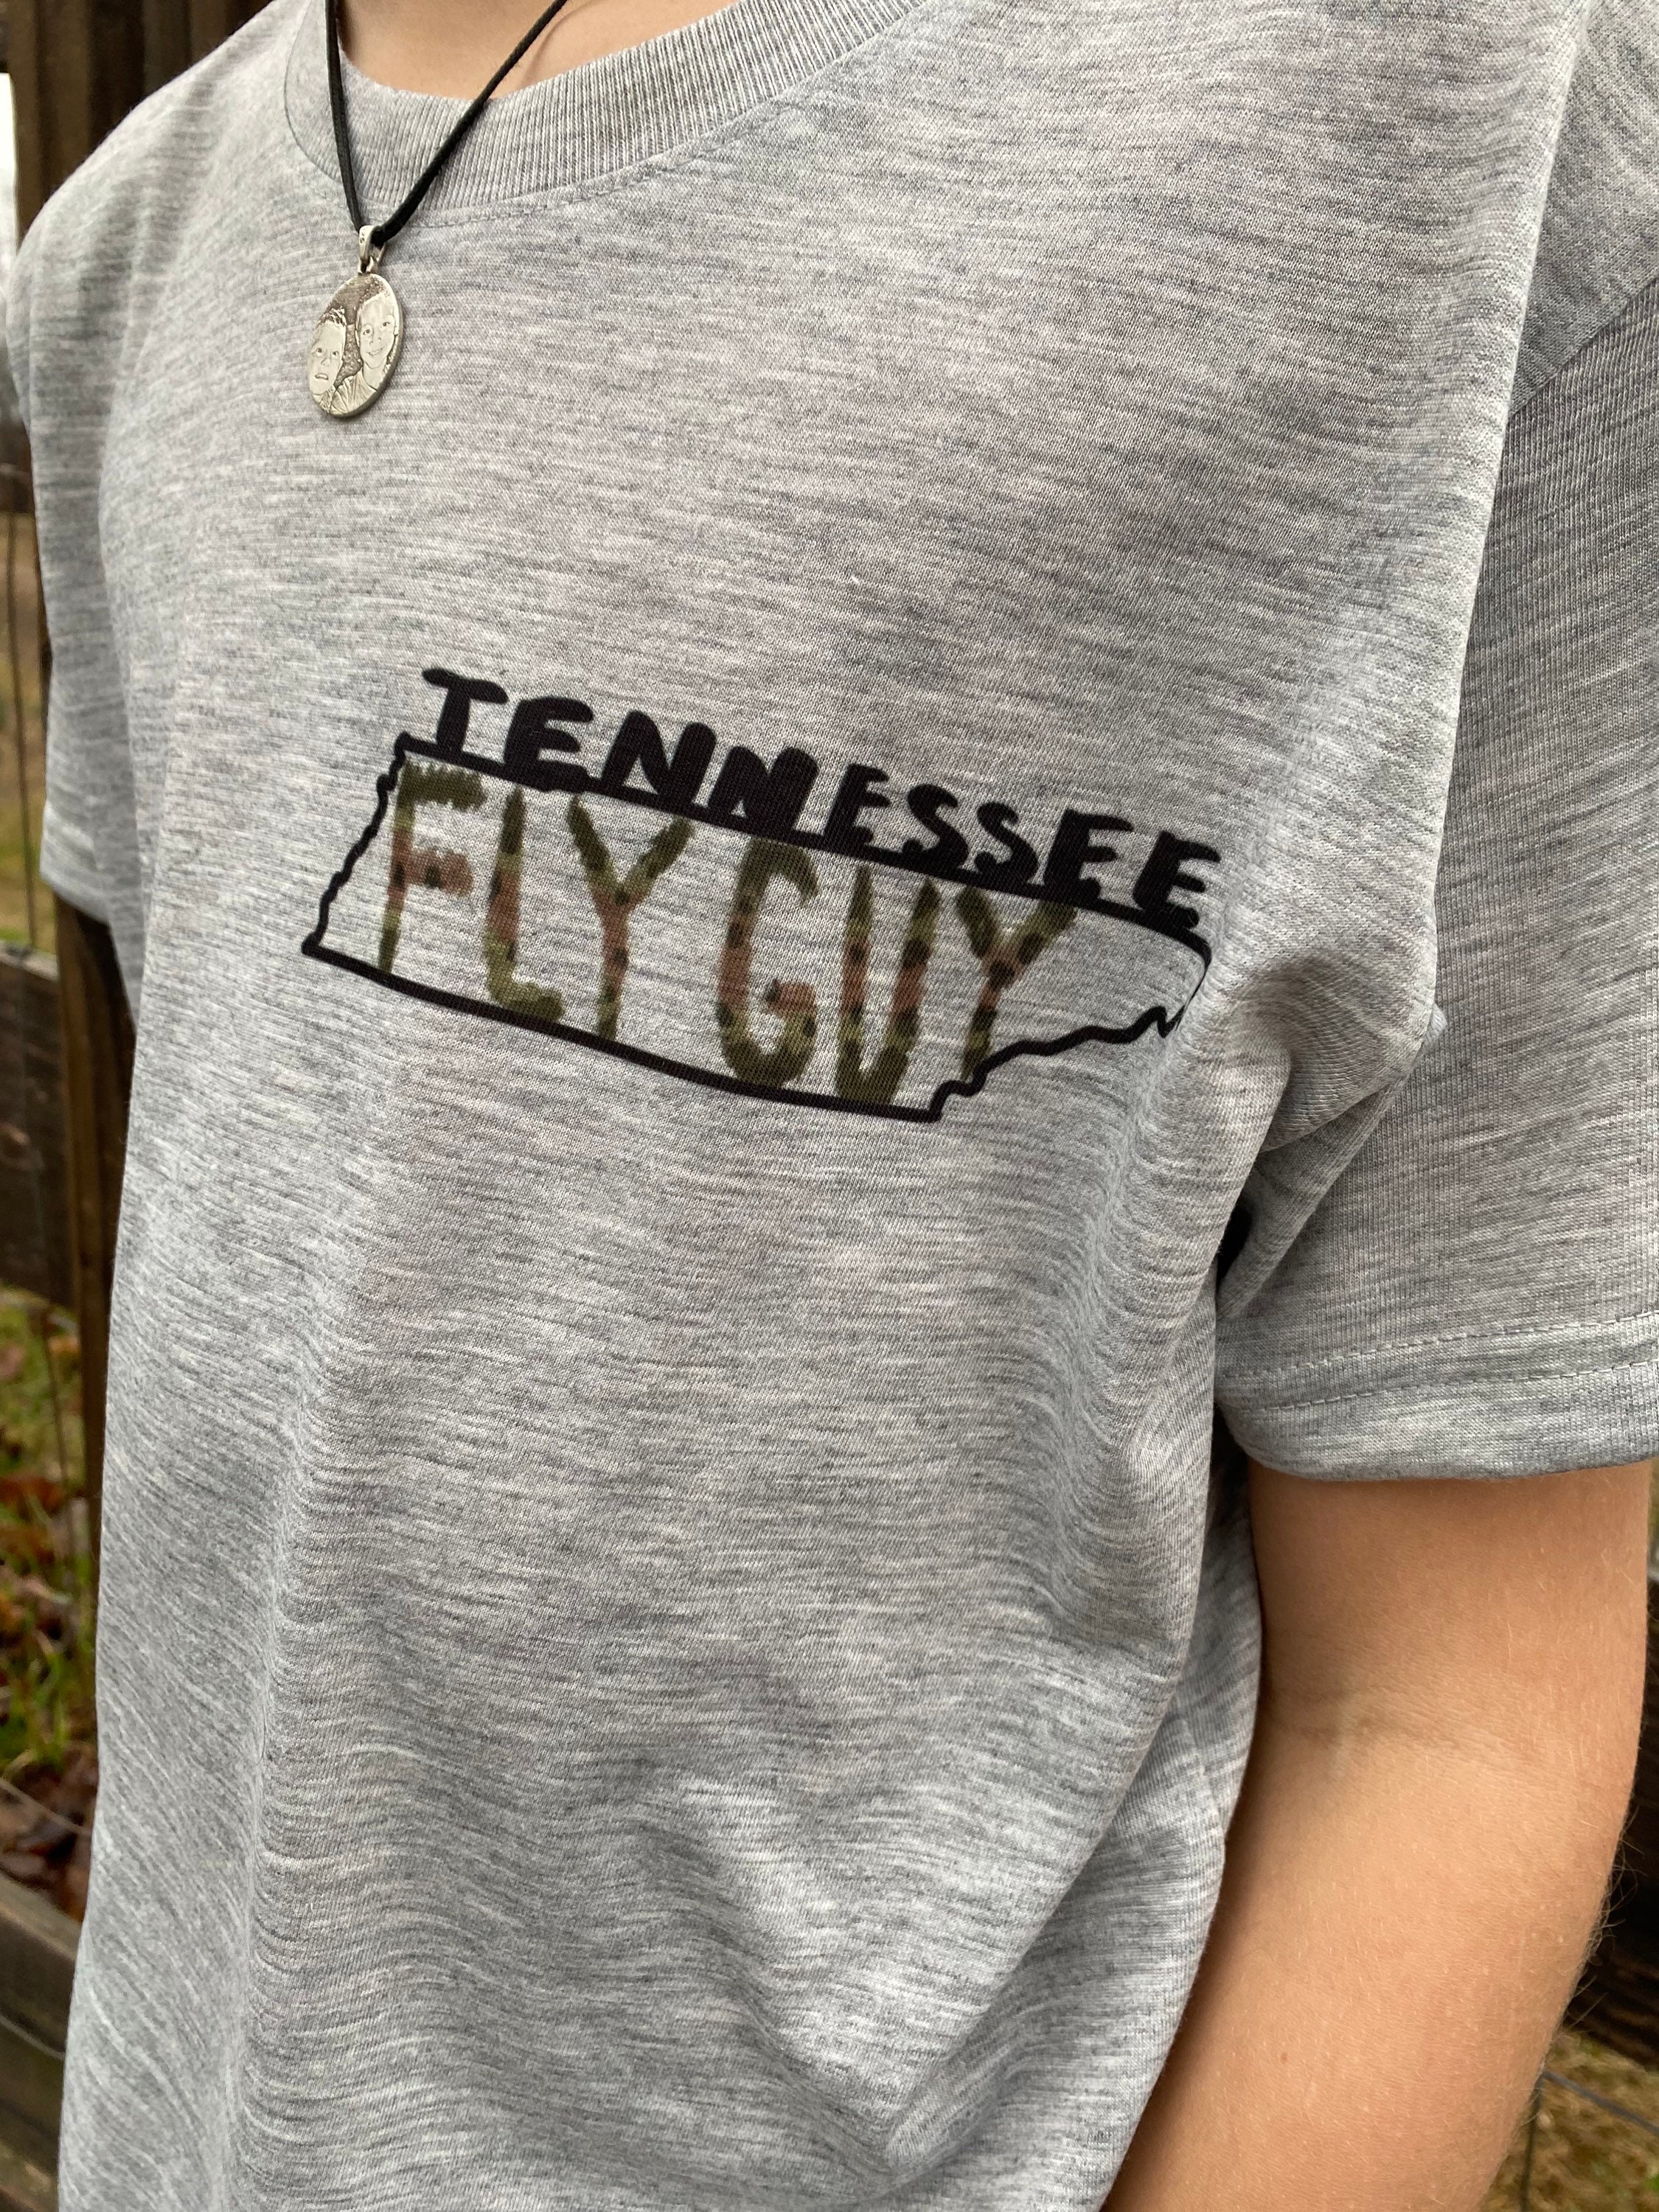 Tshirt for Men Tennessee Fly Fishing Shirt Rainbow Trout Shirt for Men East Tennessee Fishing Shirt Fly Fishing Rainbow Trout